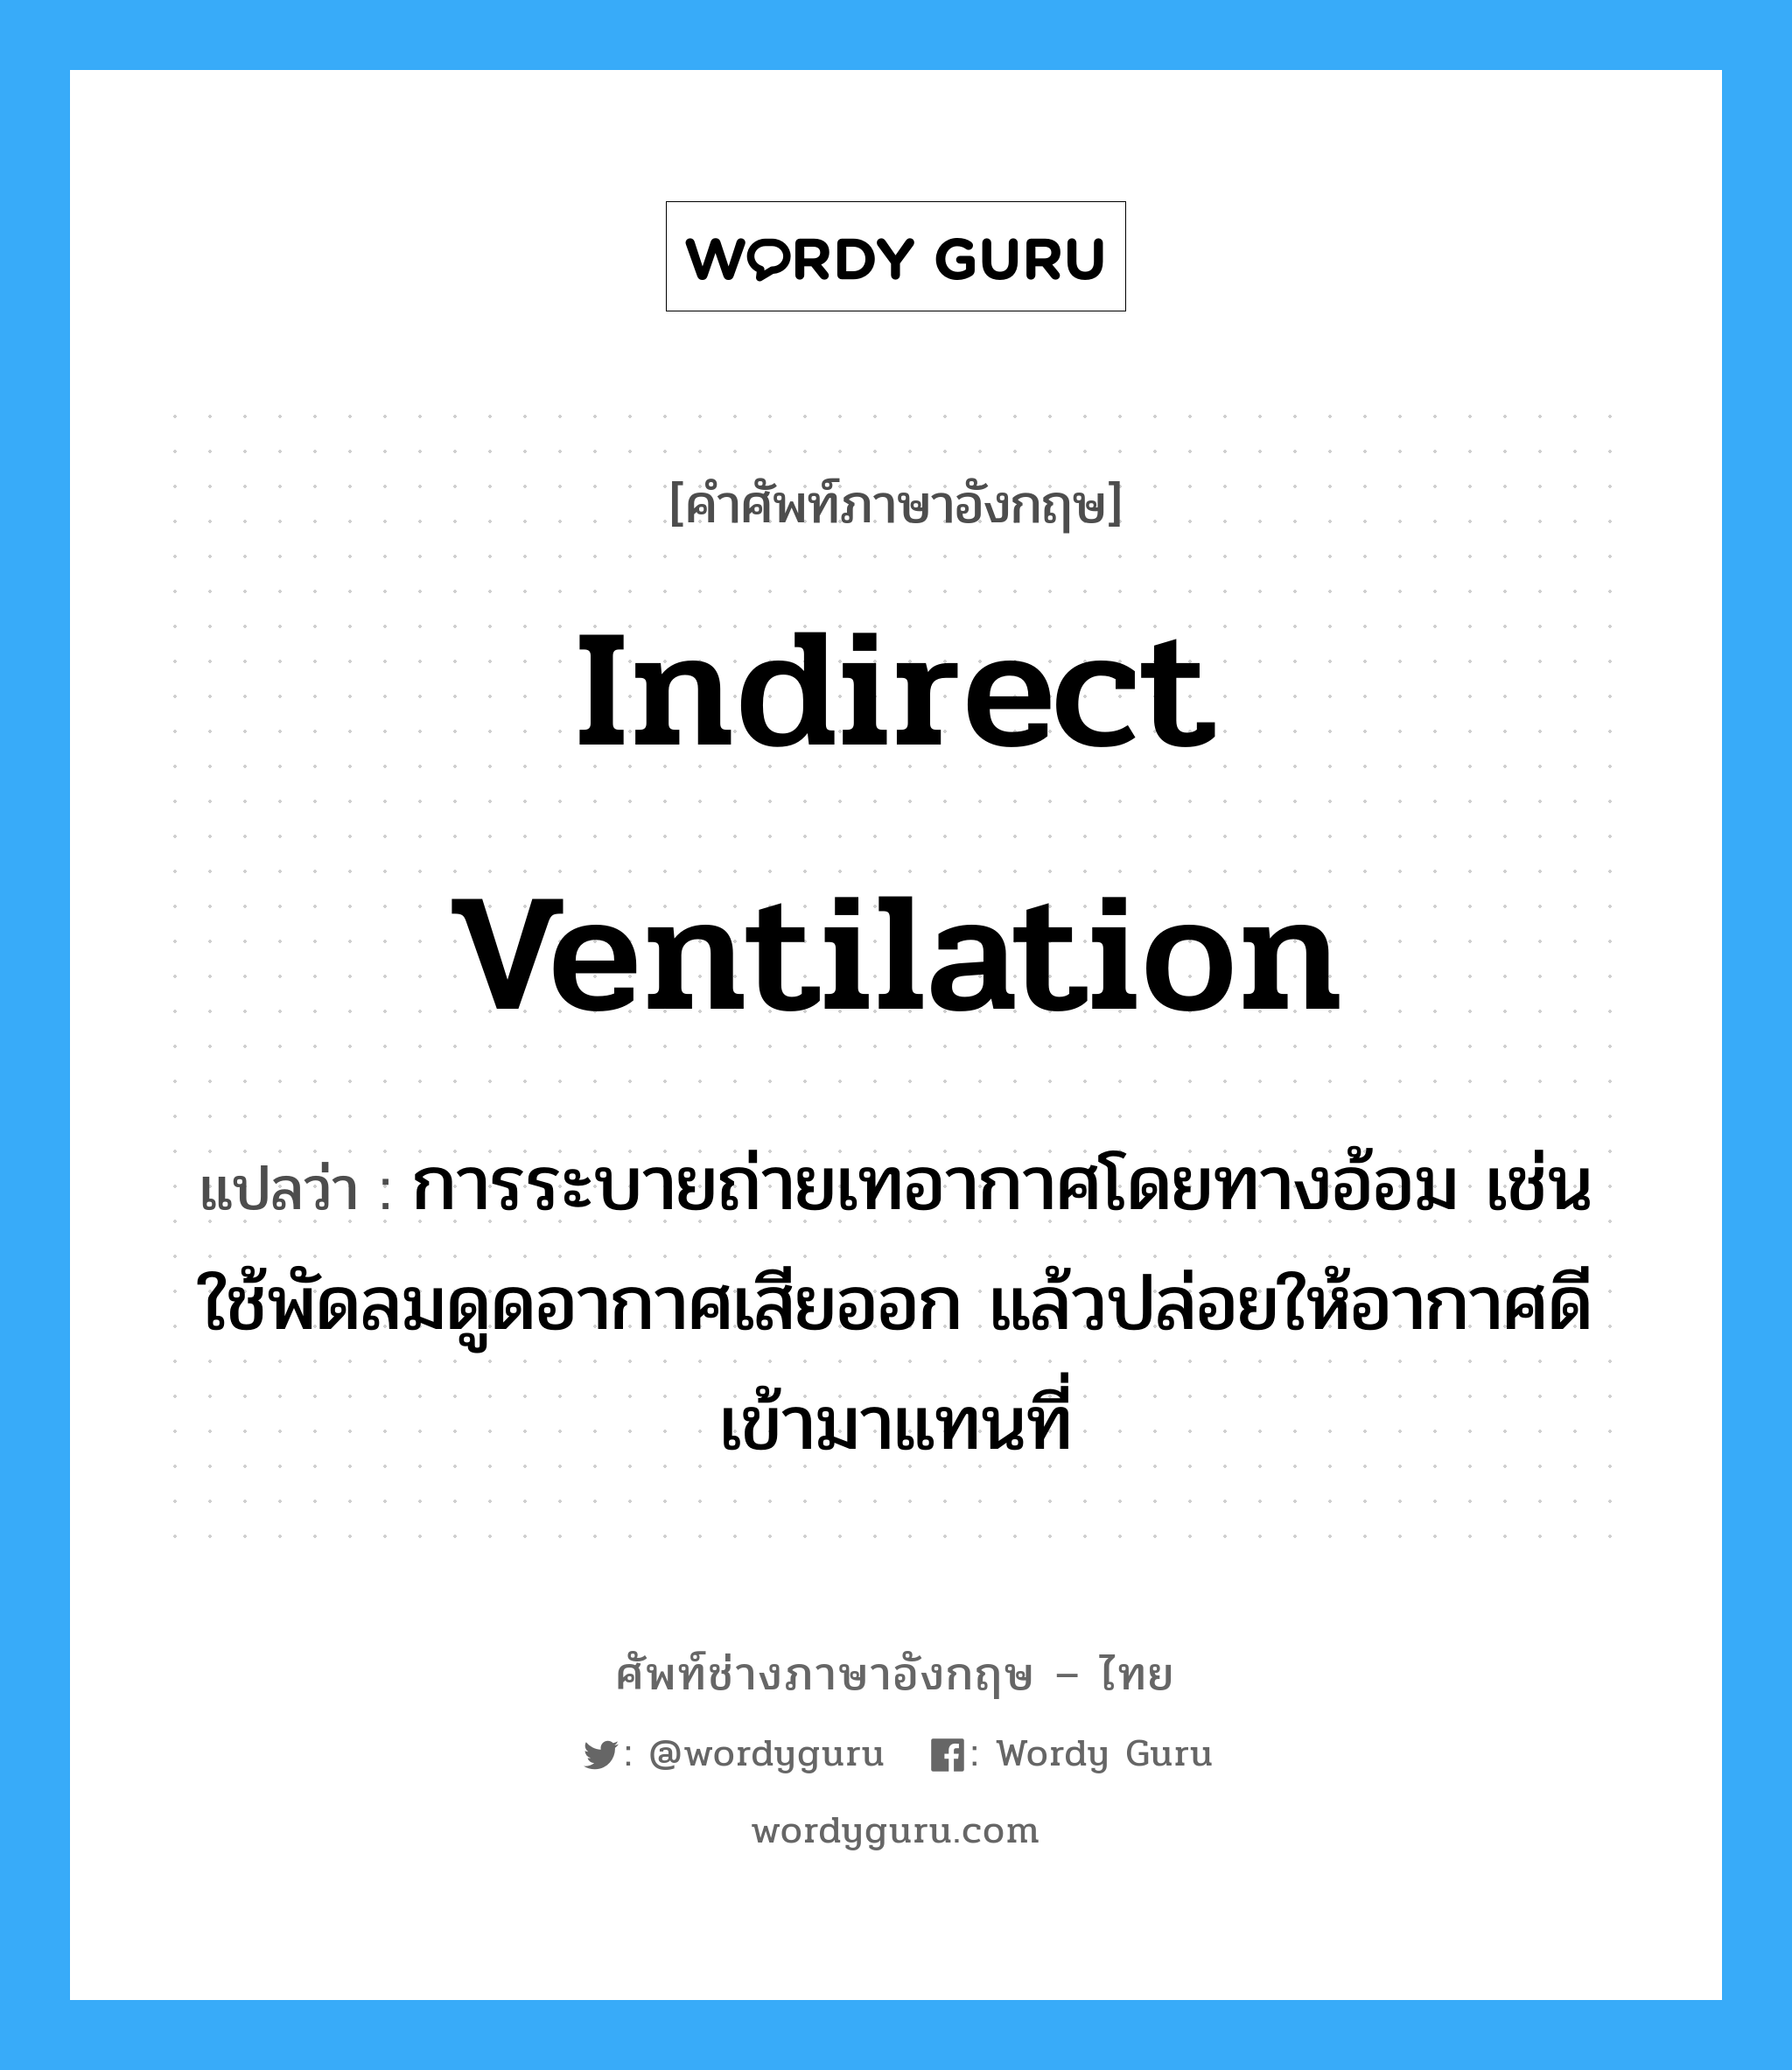 indirect ventilation แปลว่า?, คำศัพท์ช่างภาษาอังกฤษ - ไทย indirect ventilation คำศัพท์ภาษาอังกฤษ indirect ventilation แปลว่า การระบายถ่ายเทอากาศโดยทางอ้อม เช่น ใช้พัดลมดูดอากาศเสียออก แล้วปล่อยให้อากาศดีเข้ามาแทนที่